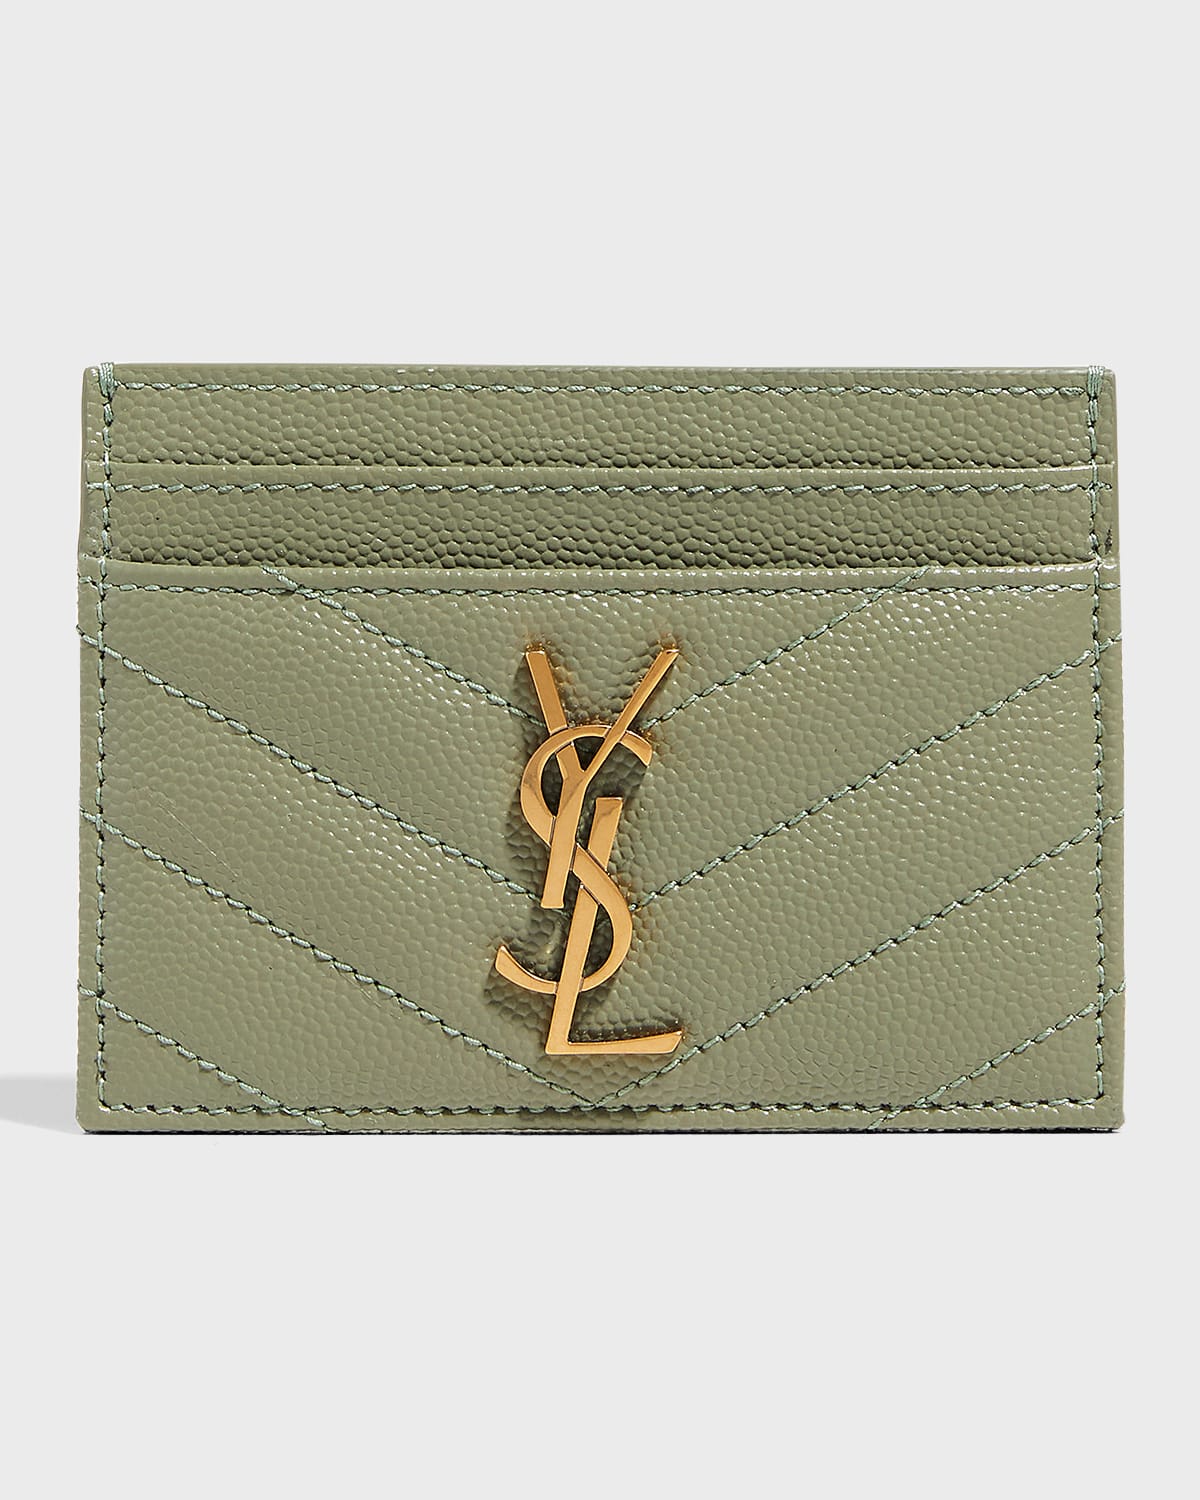 YSL Monogram Grain de Poudre Leather Card Case, Golden Hardware